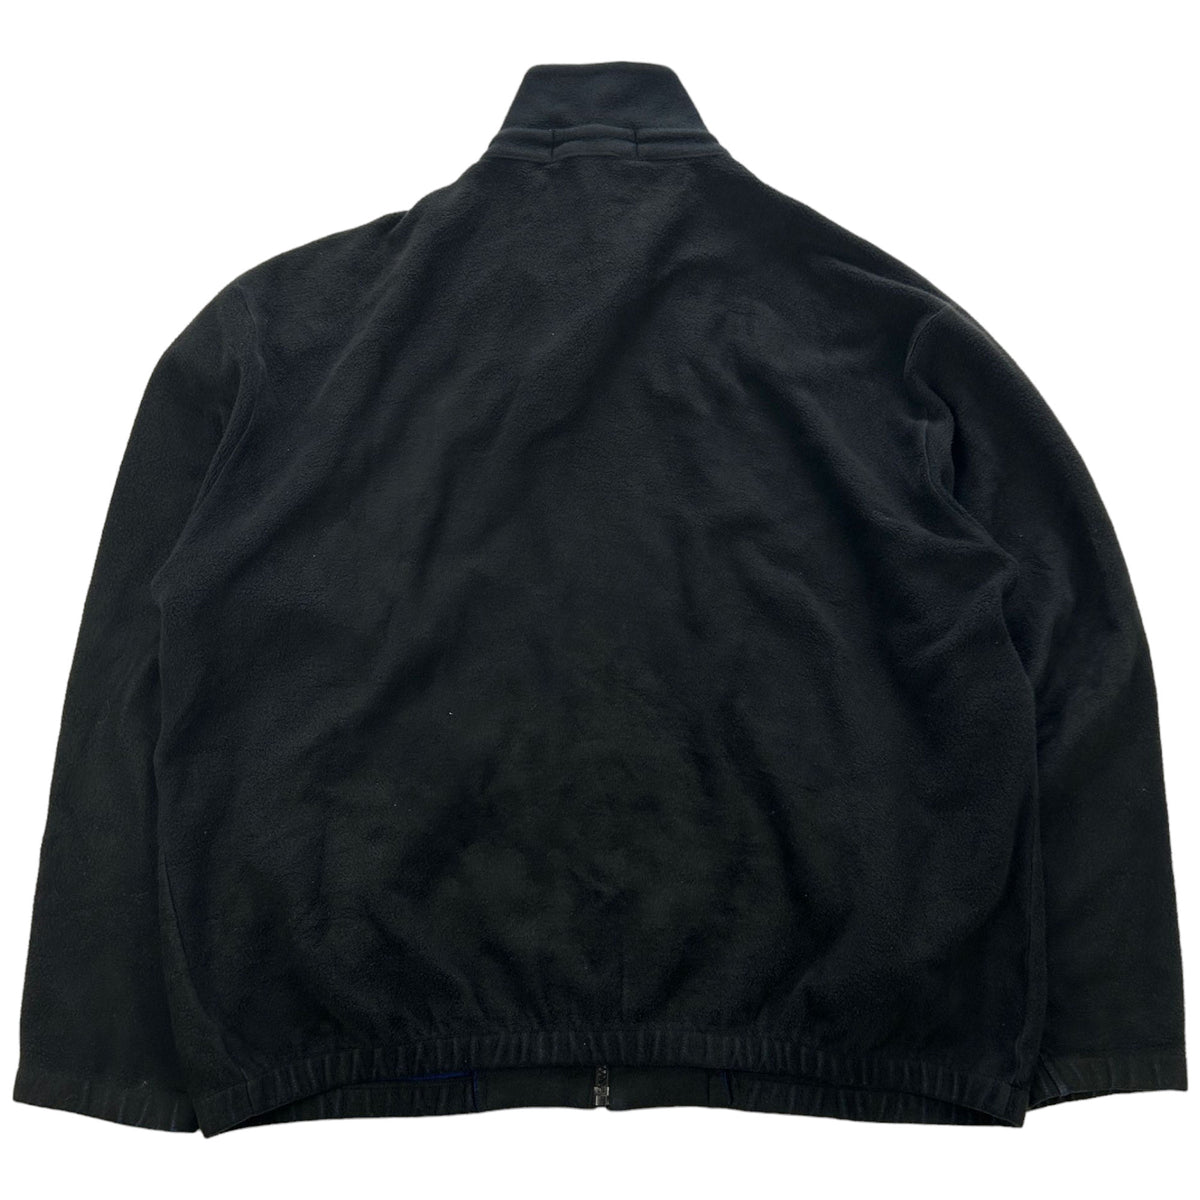 Vintage Yves Saint Laurent Fleece Jacket Size L